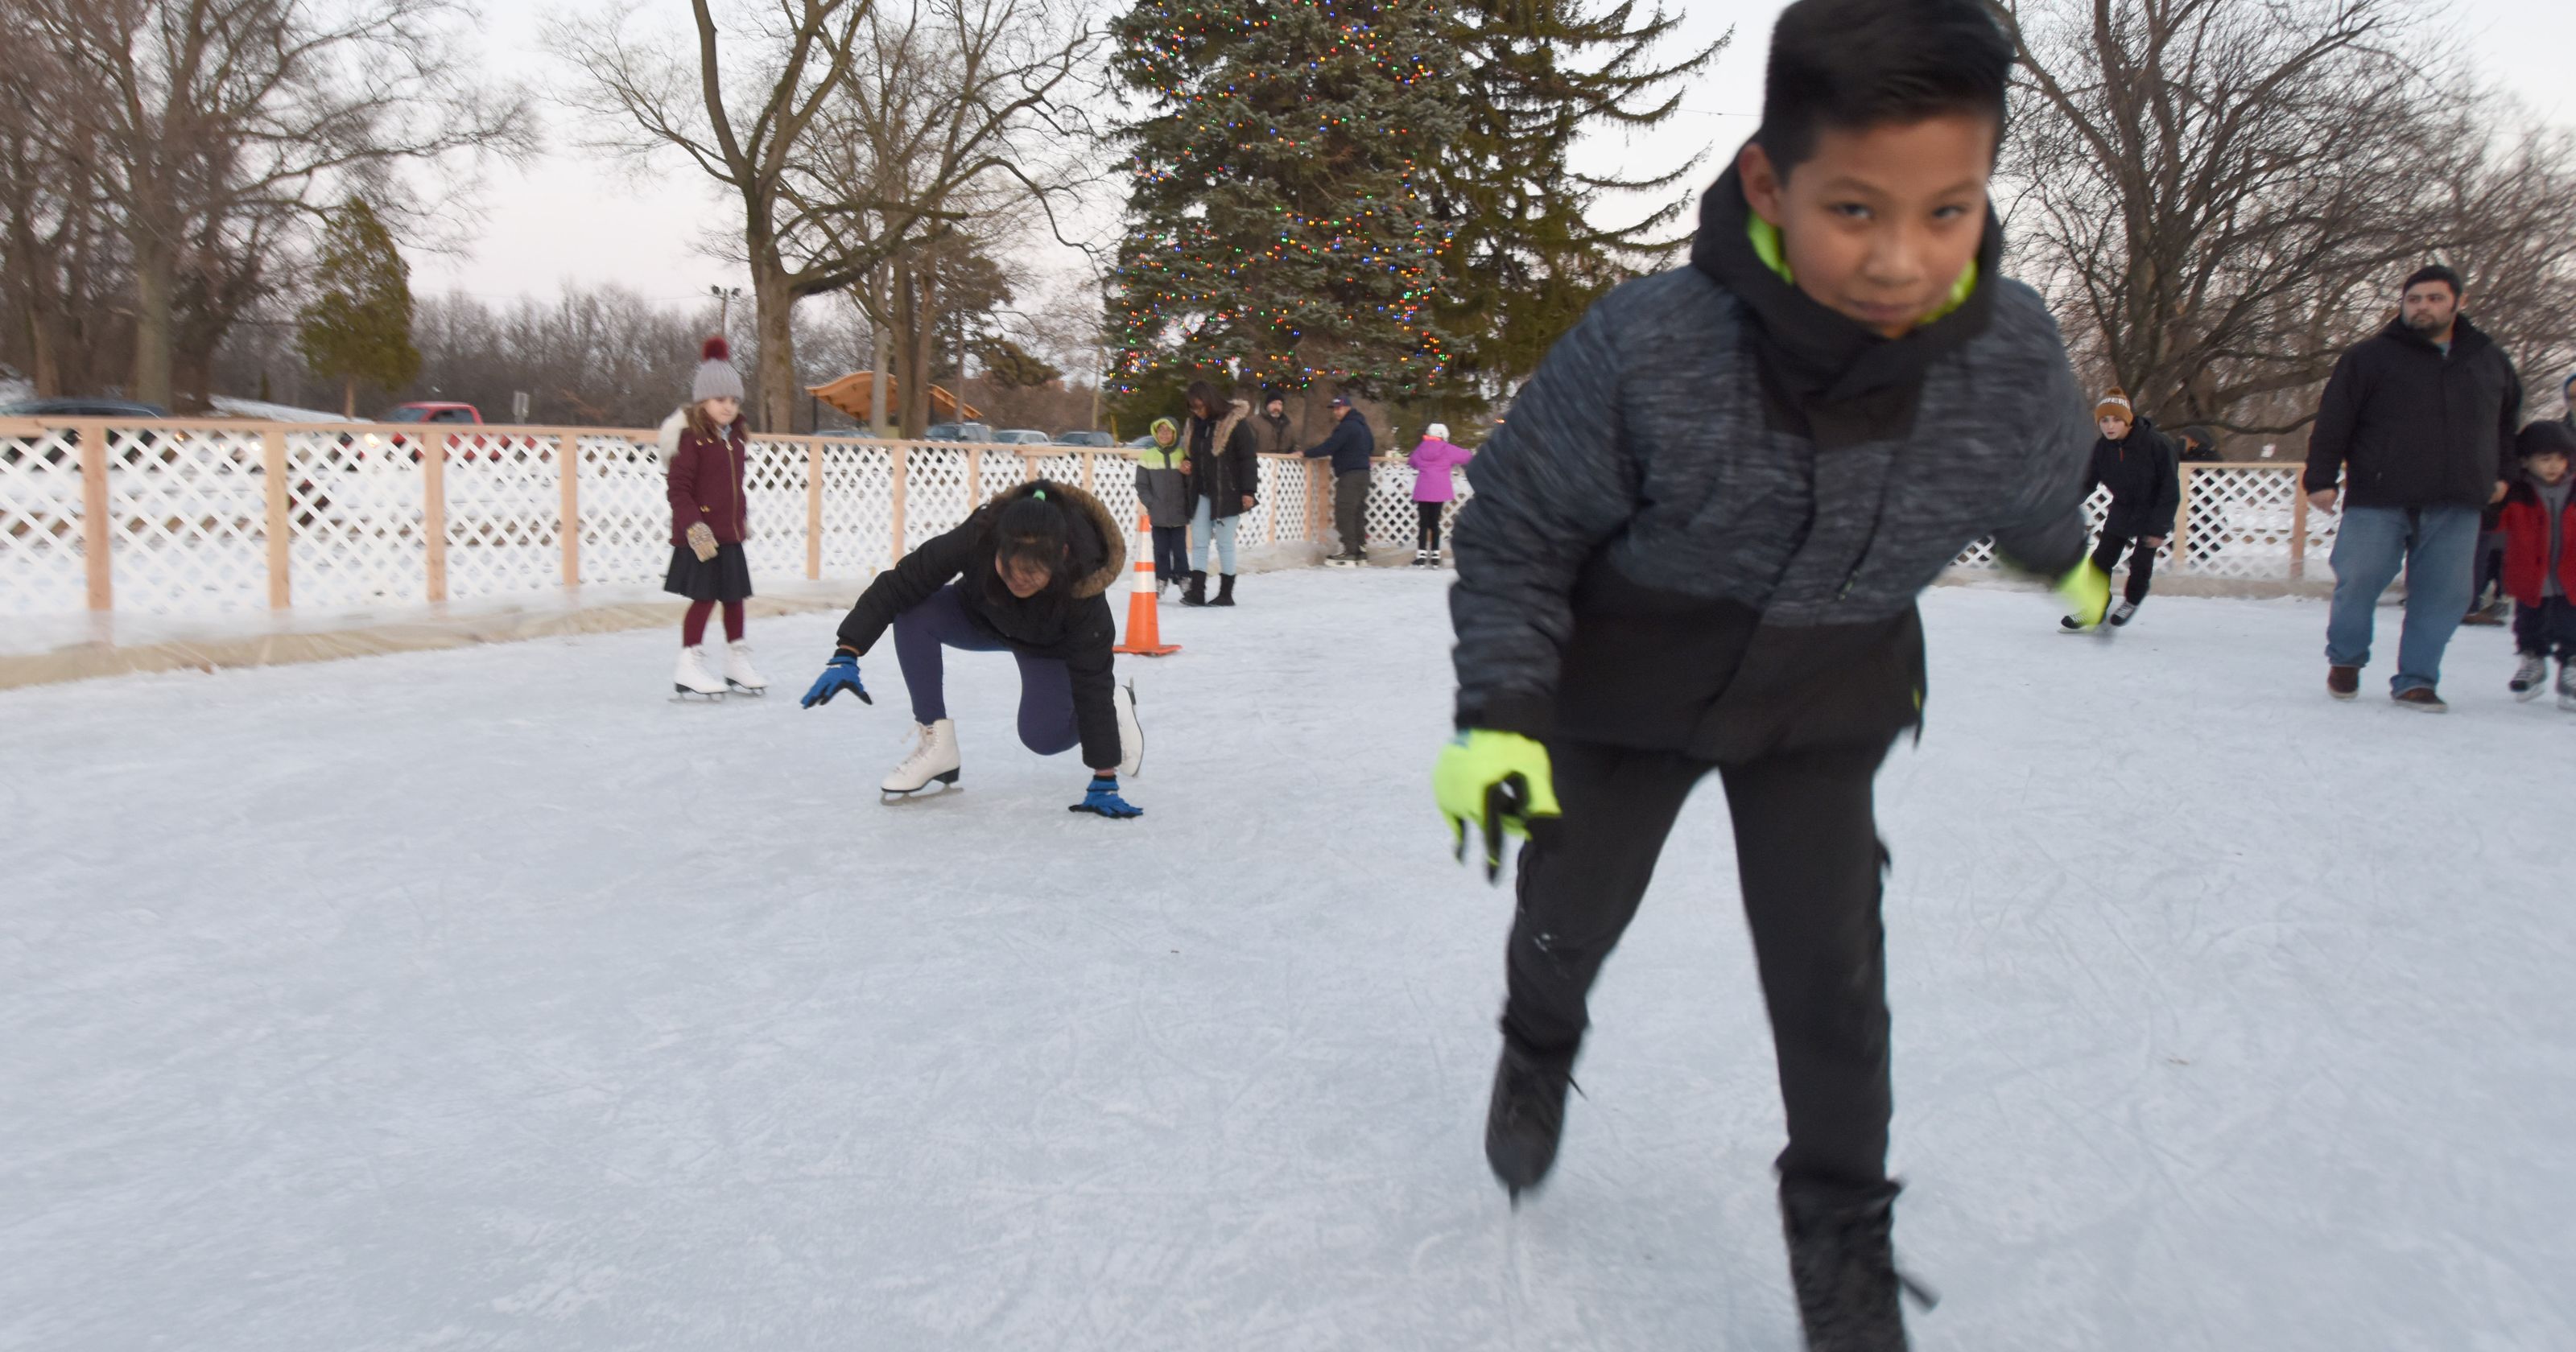 Ice skating rink opens in Passaic's Third Ward Park